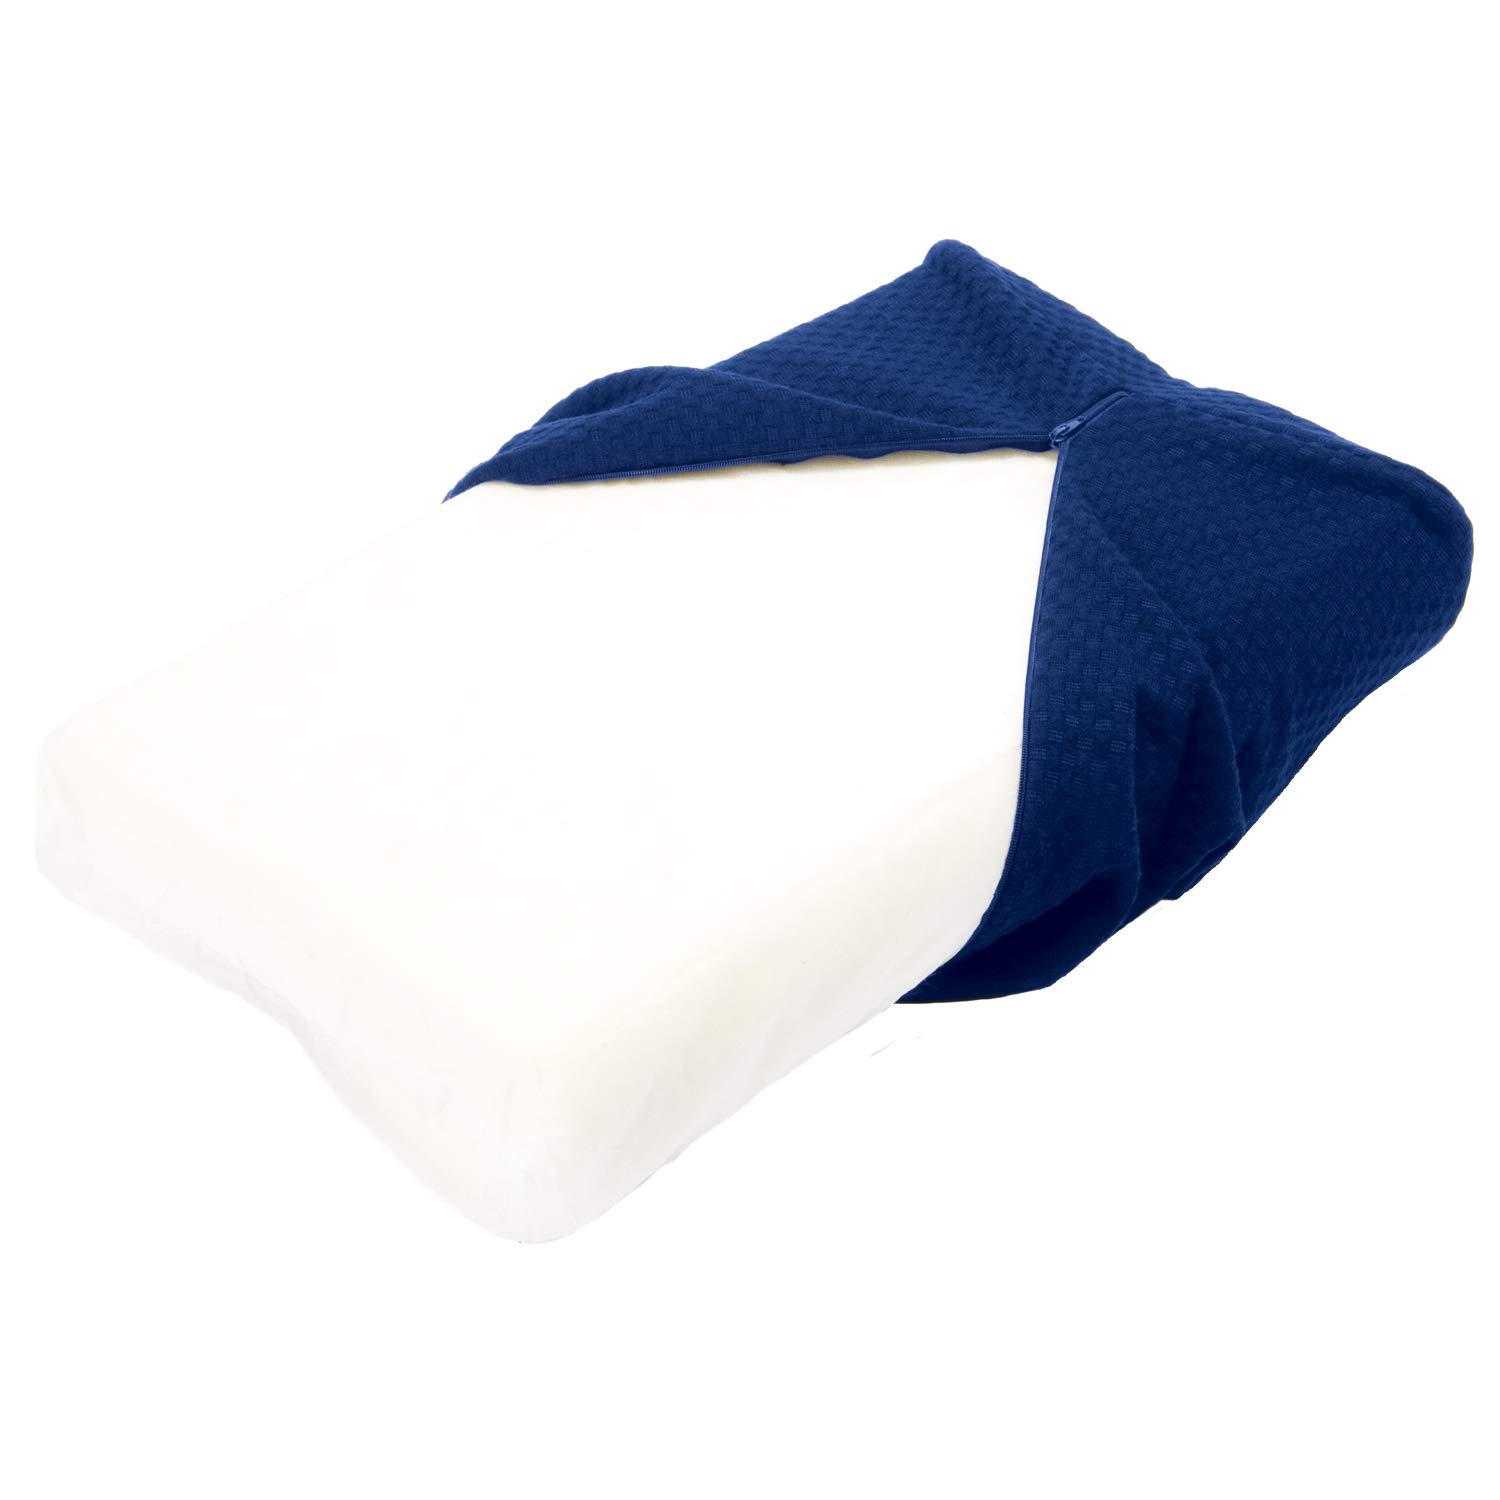 Carex Contour Pillow - Cervical Pillow and Neck Pillow for Sleeping - Memory Foam Neck Pillow